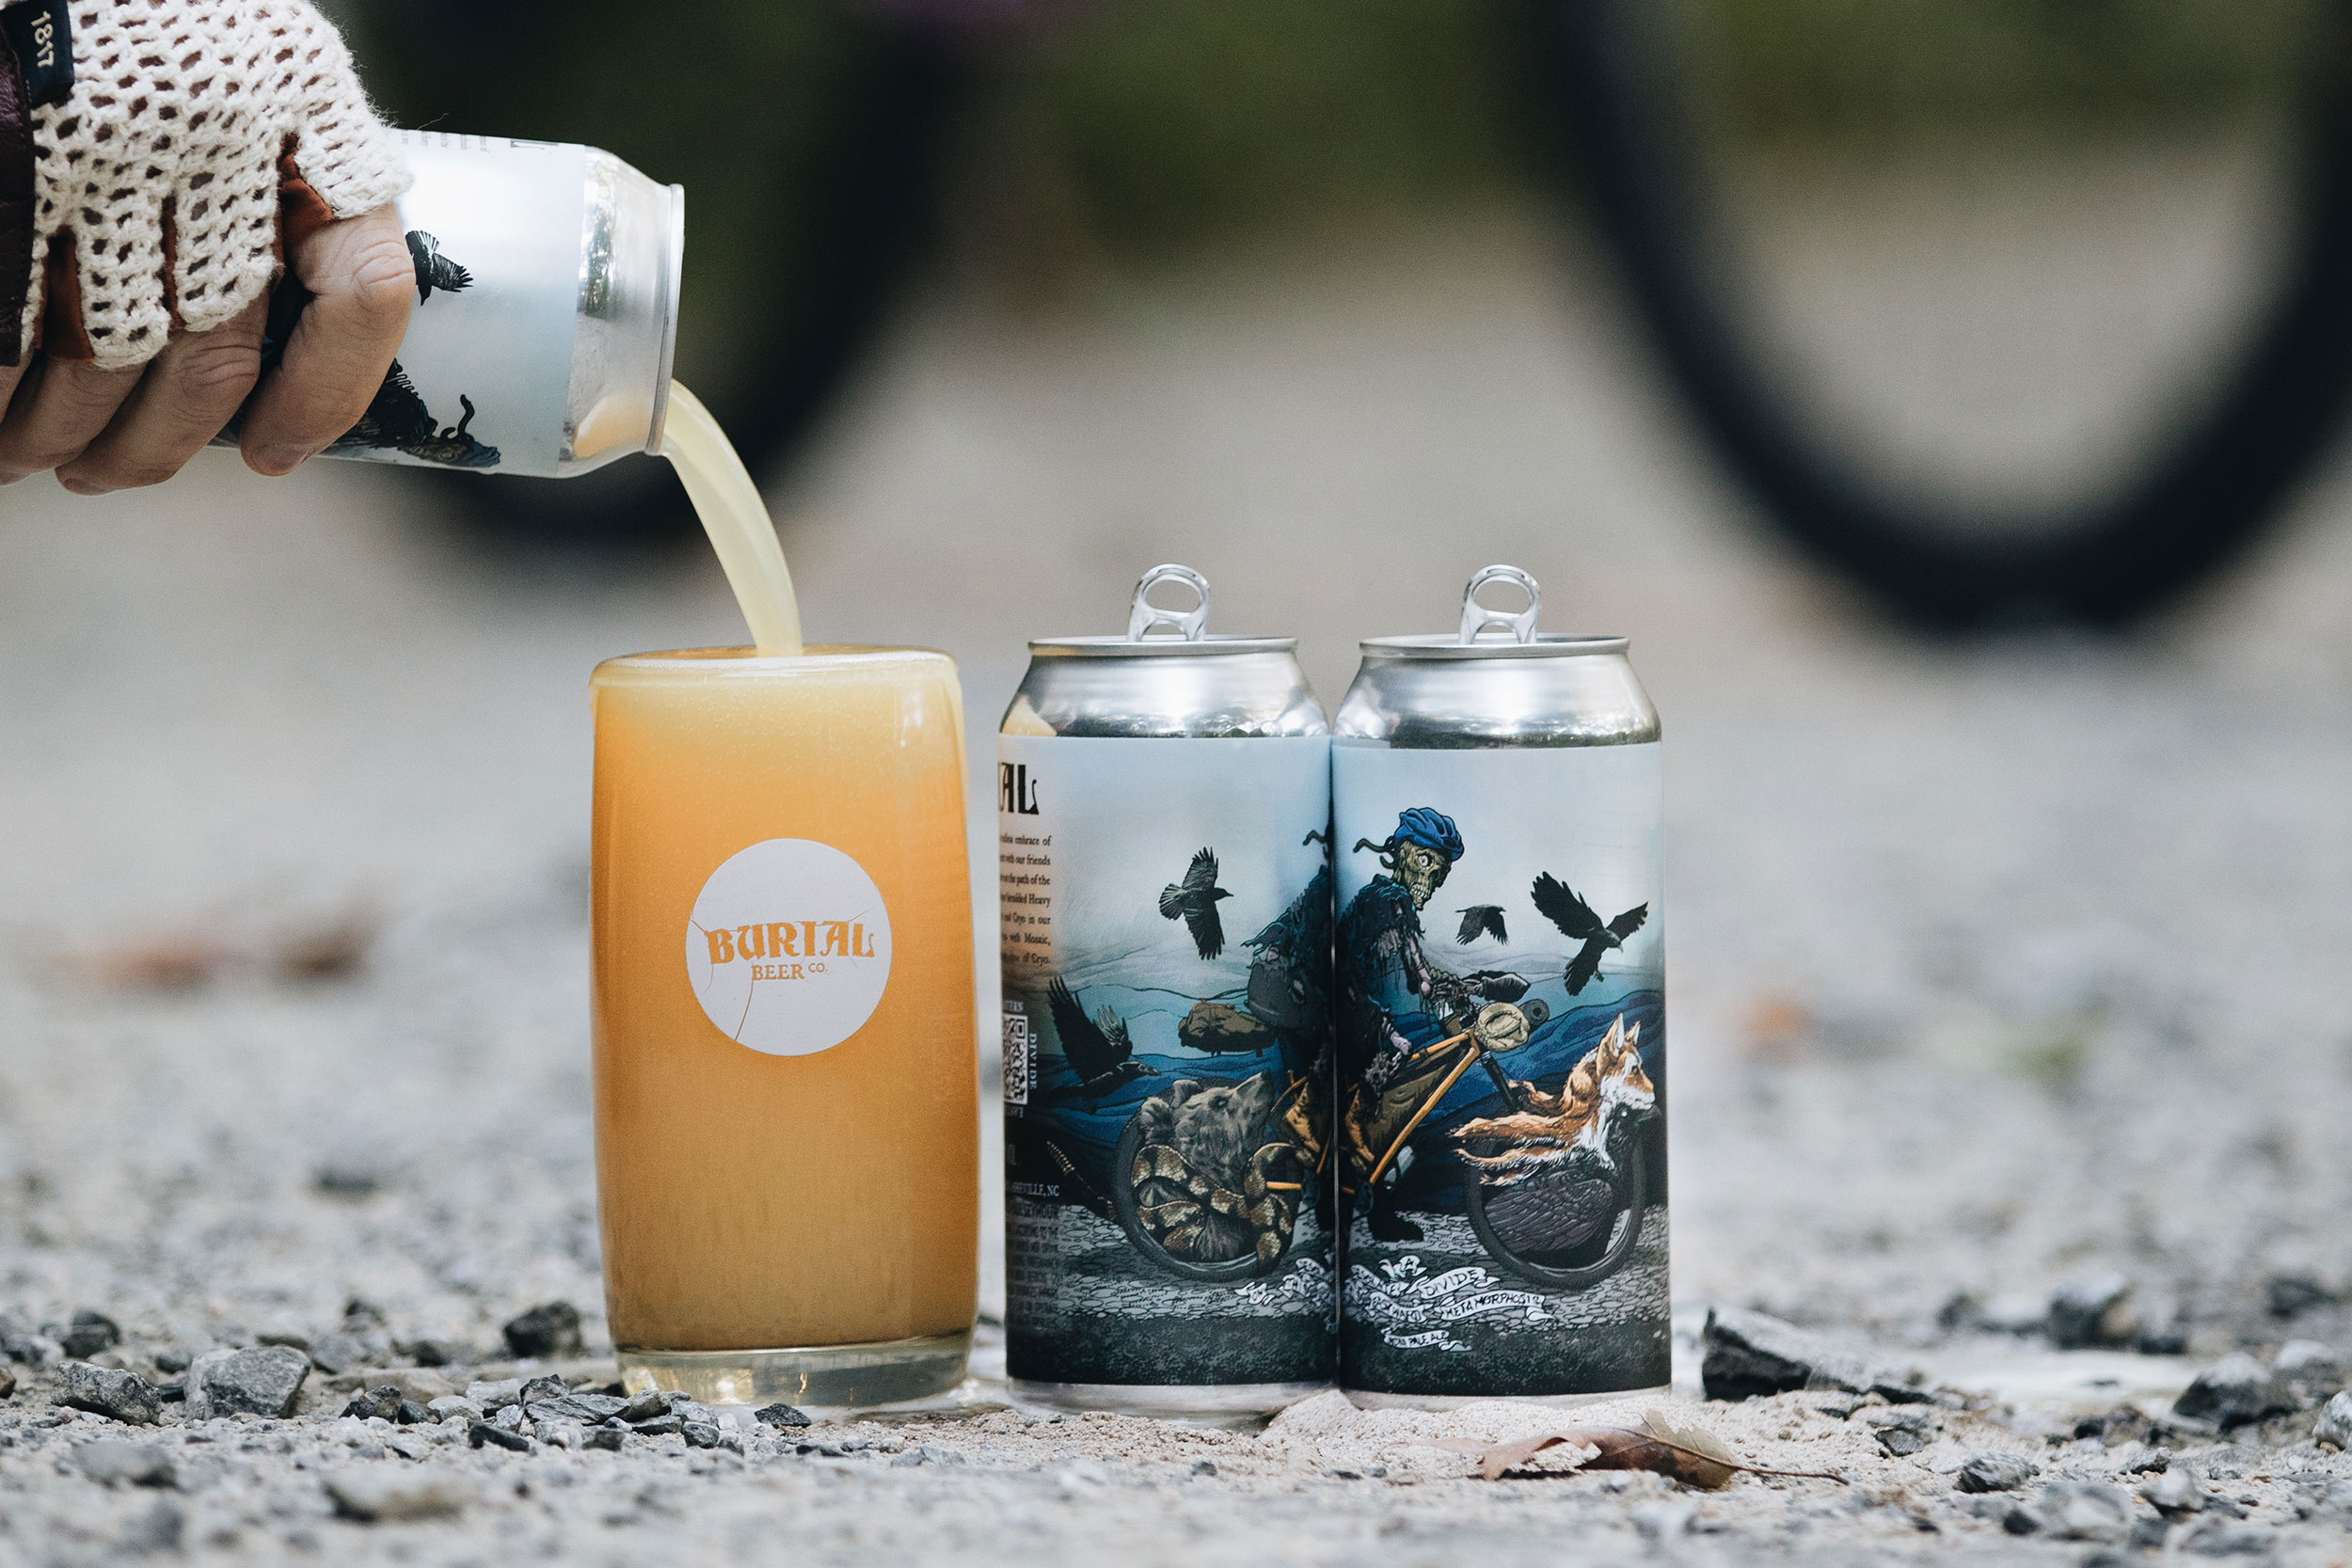 Burial Bikepacking Collaboration Beer